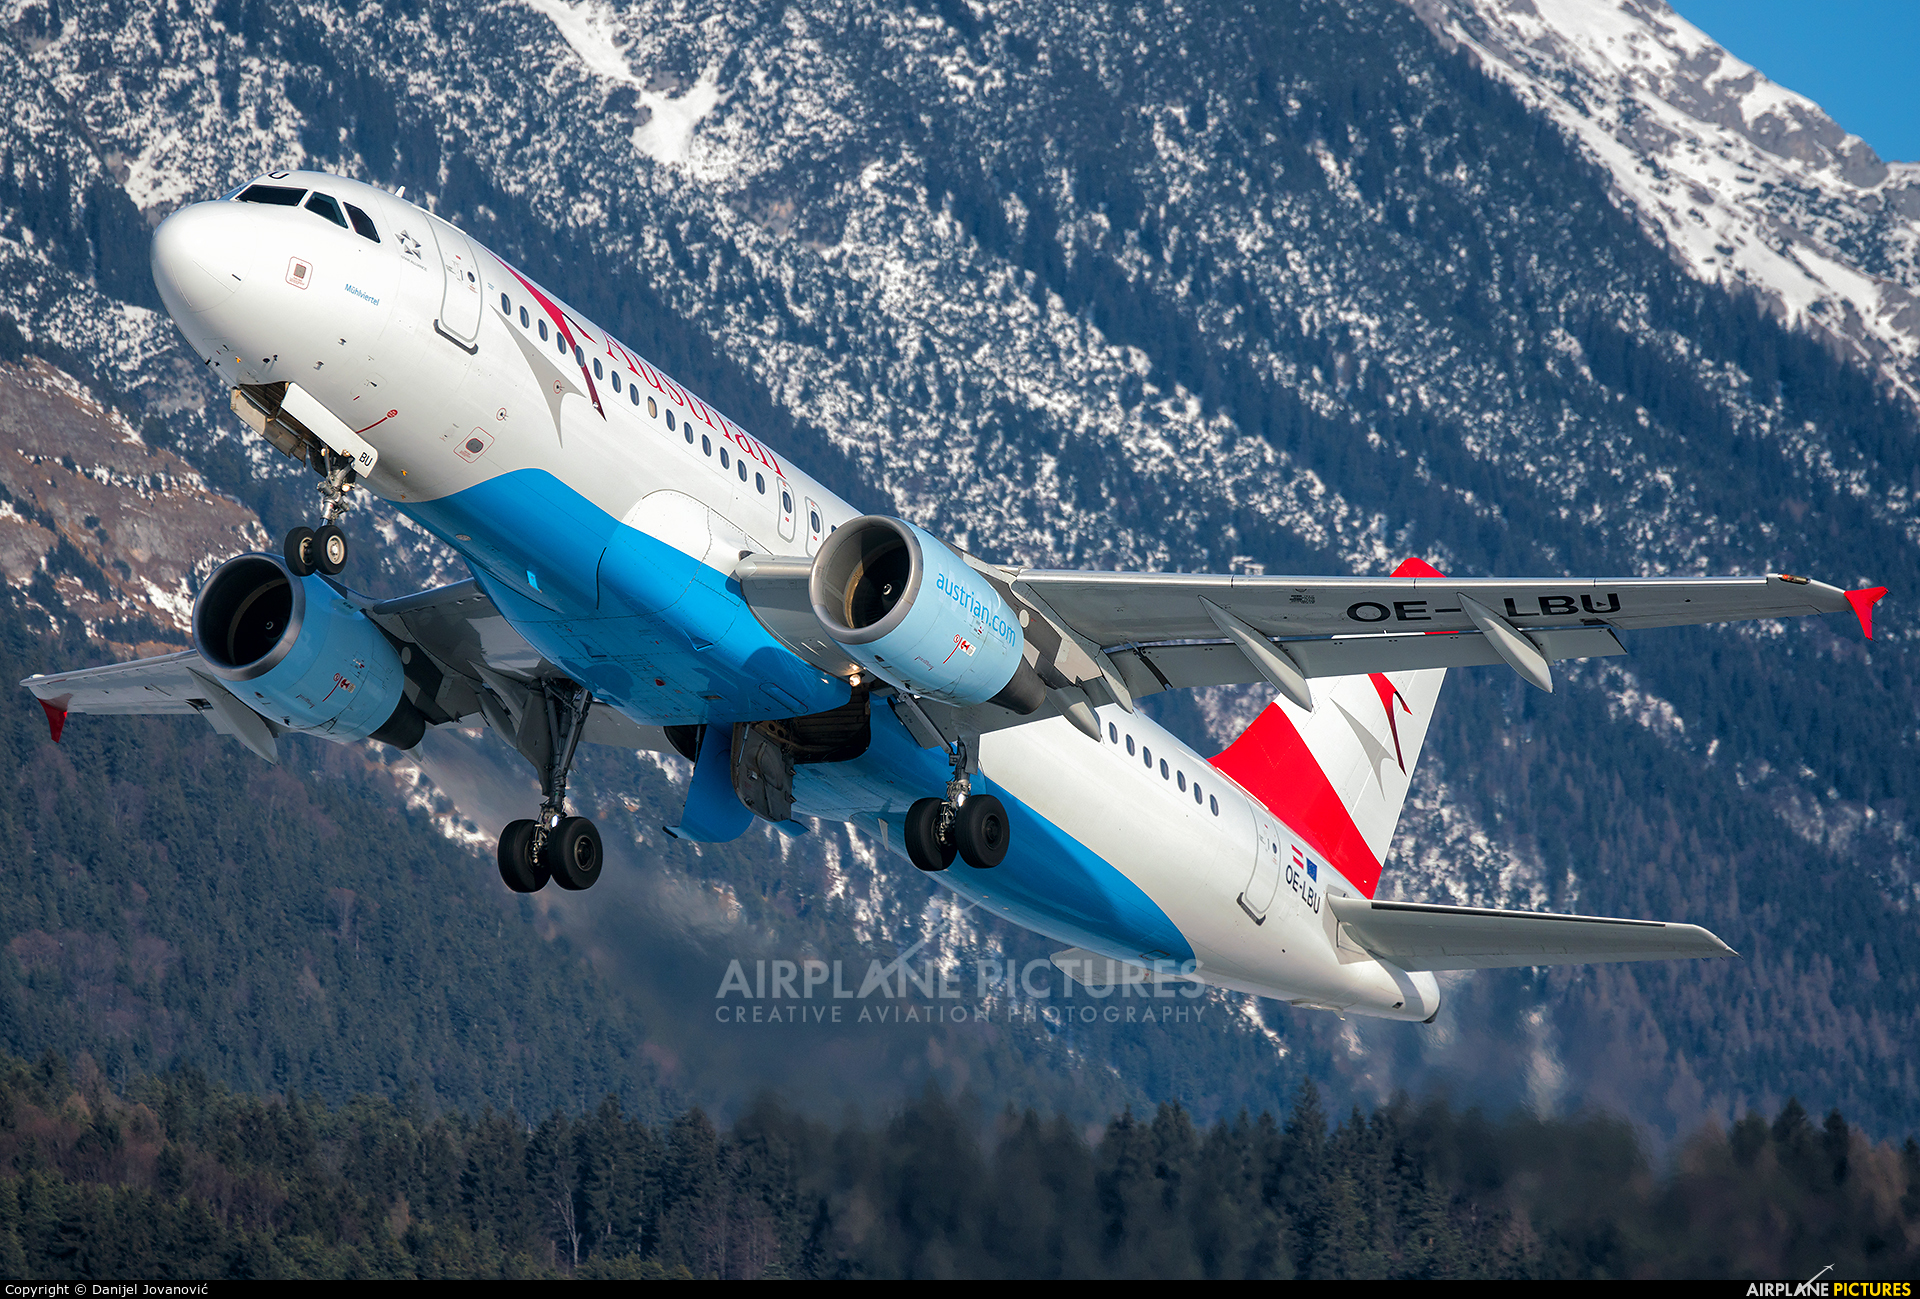 Austrian Airlines/Arrows/Tyrolean OE-LBU aircraft at Innsbruck